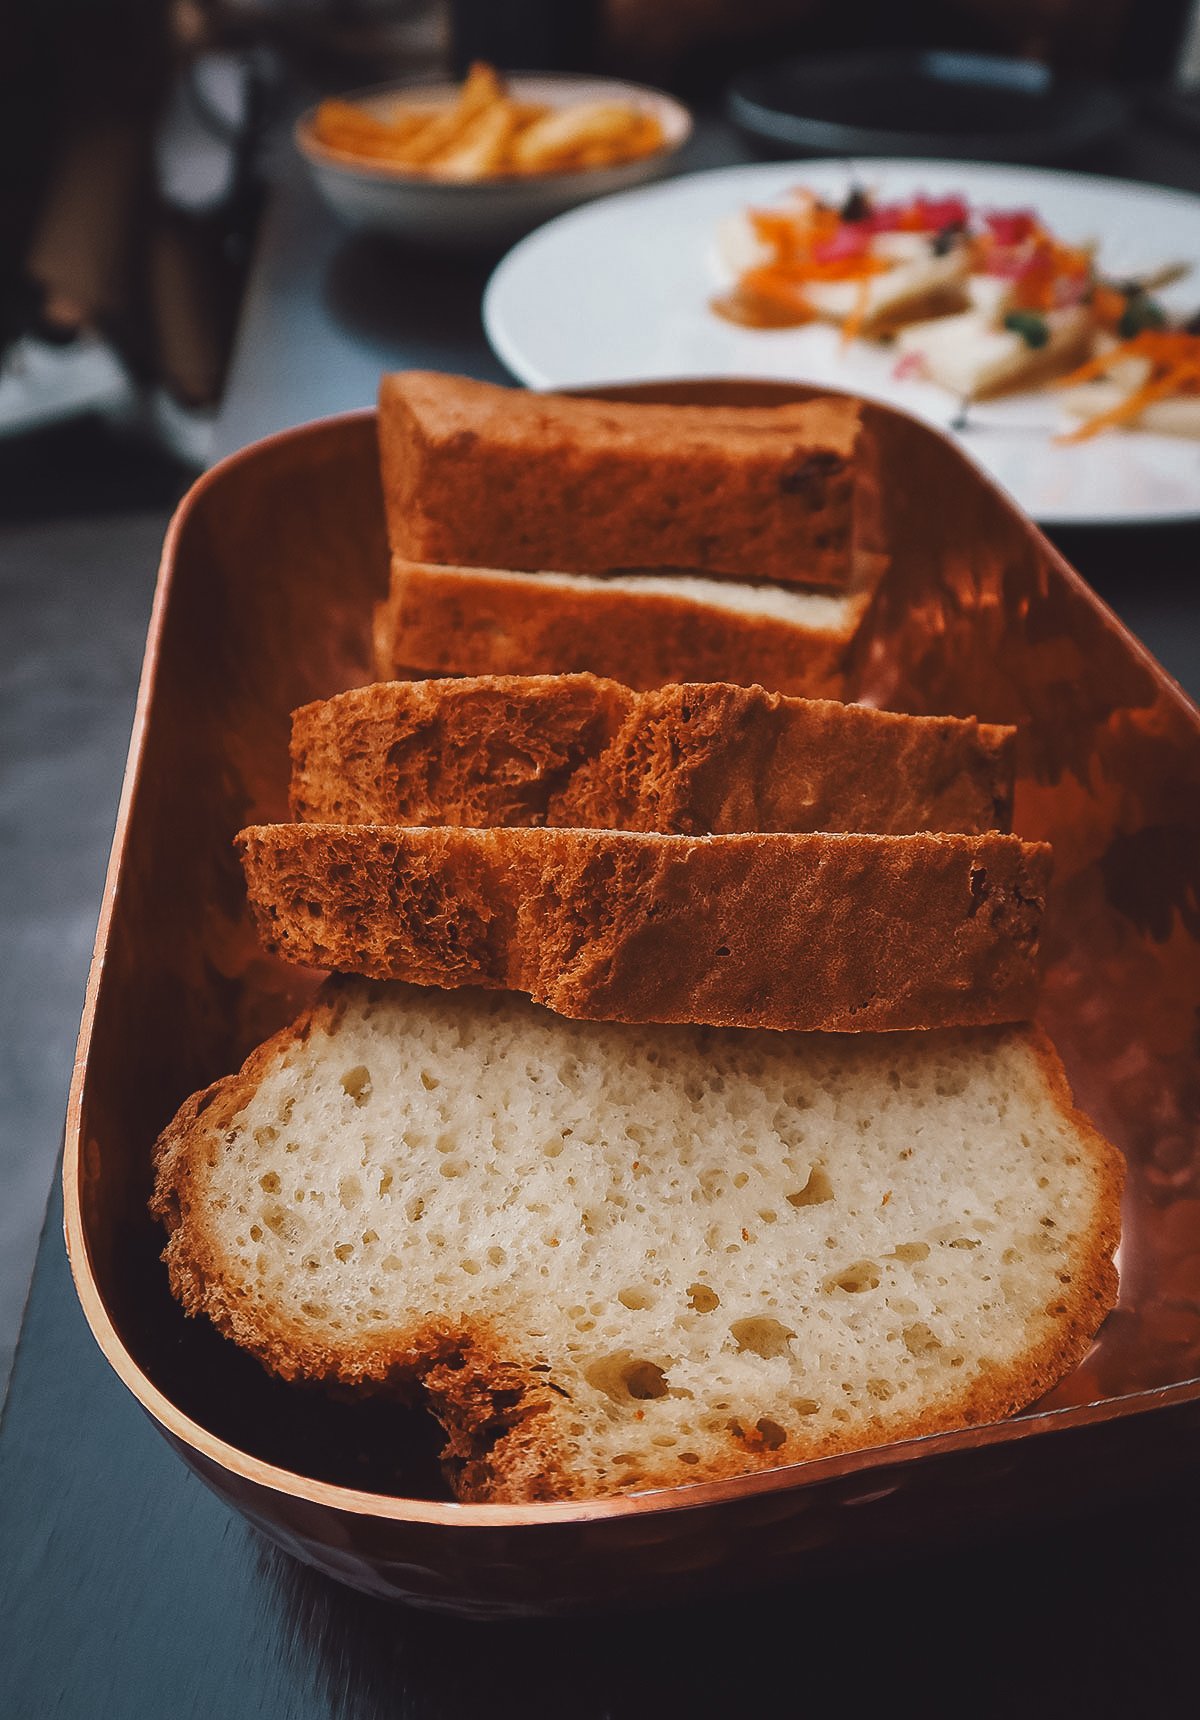 Homemade bread at a restaurant in Split